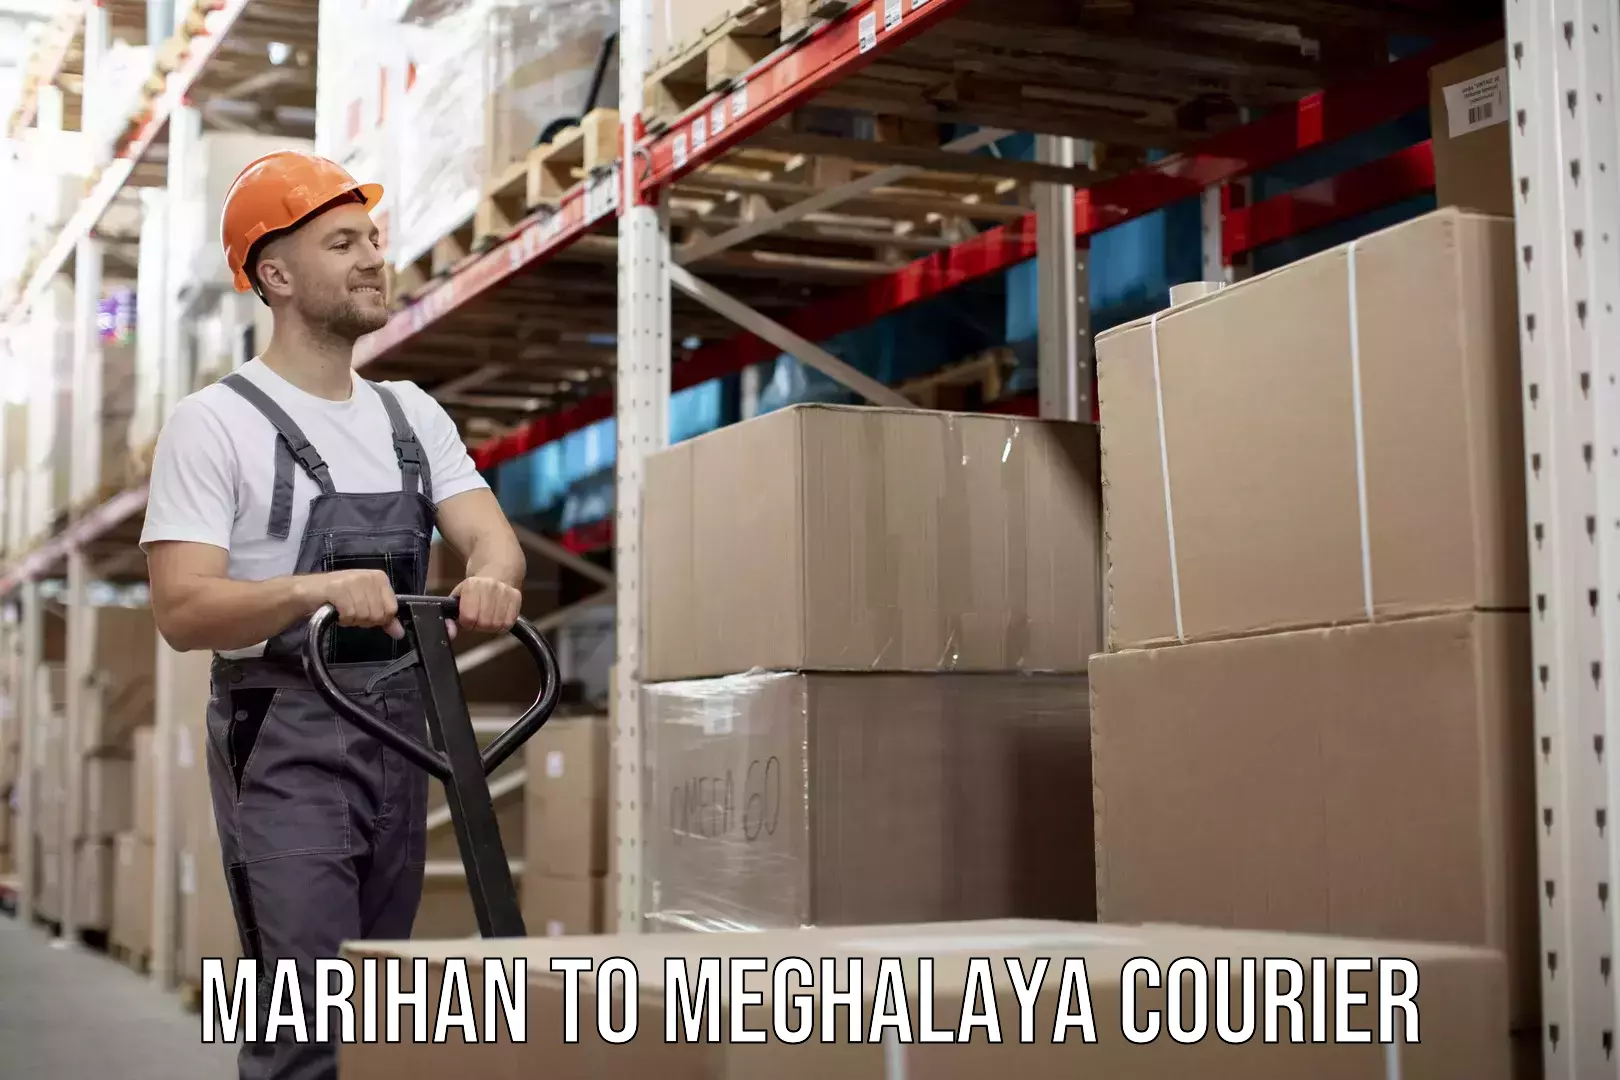 Furniture delivery service Marihan to Meghalaya